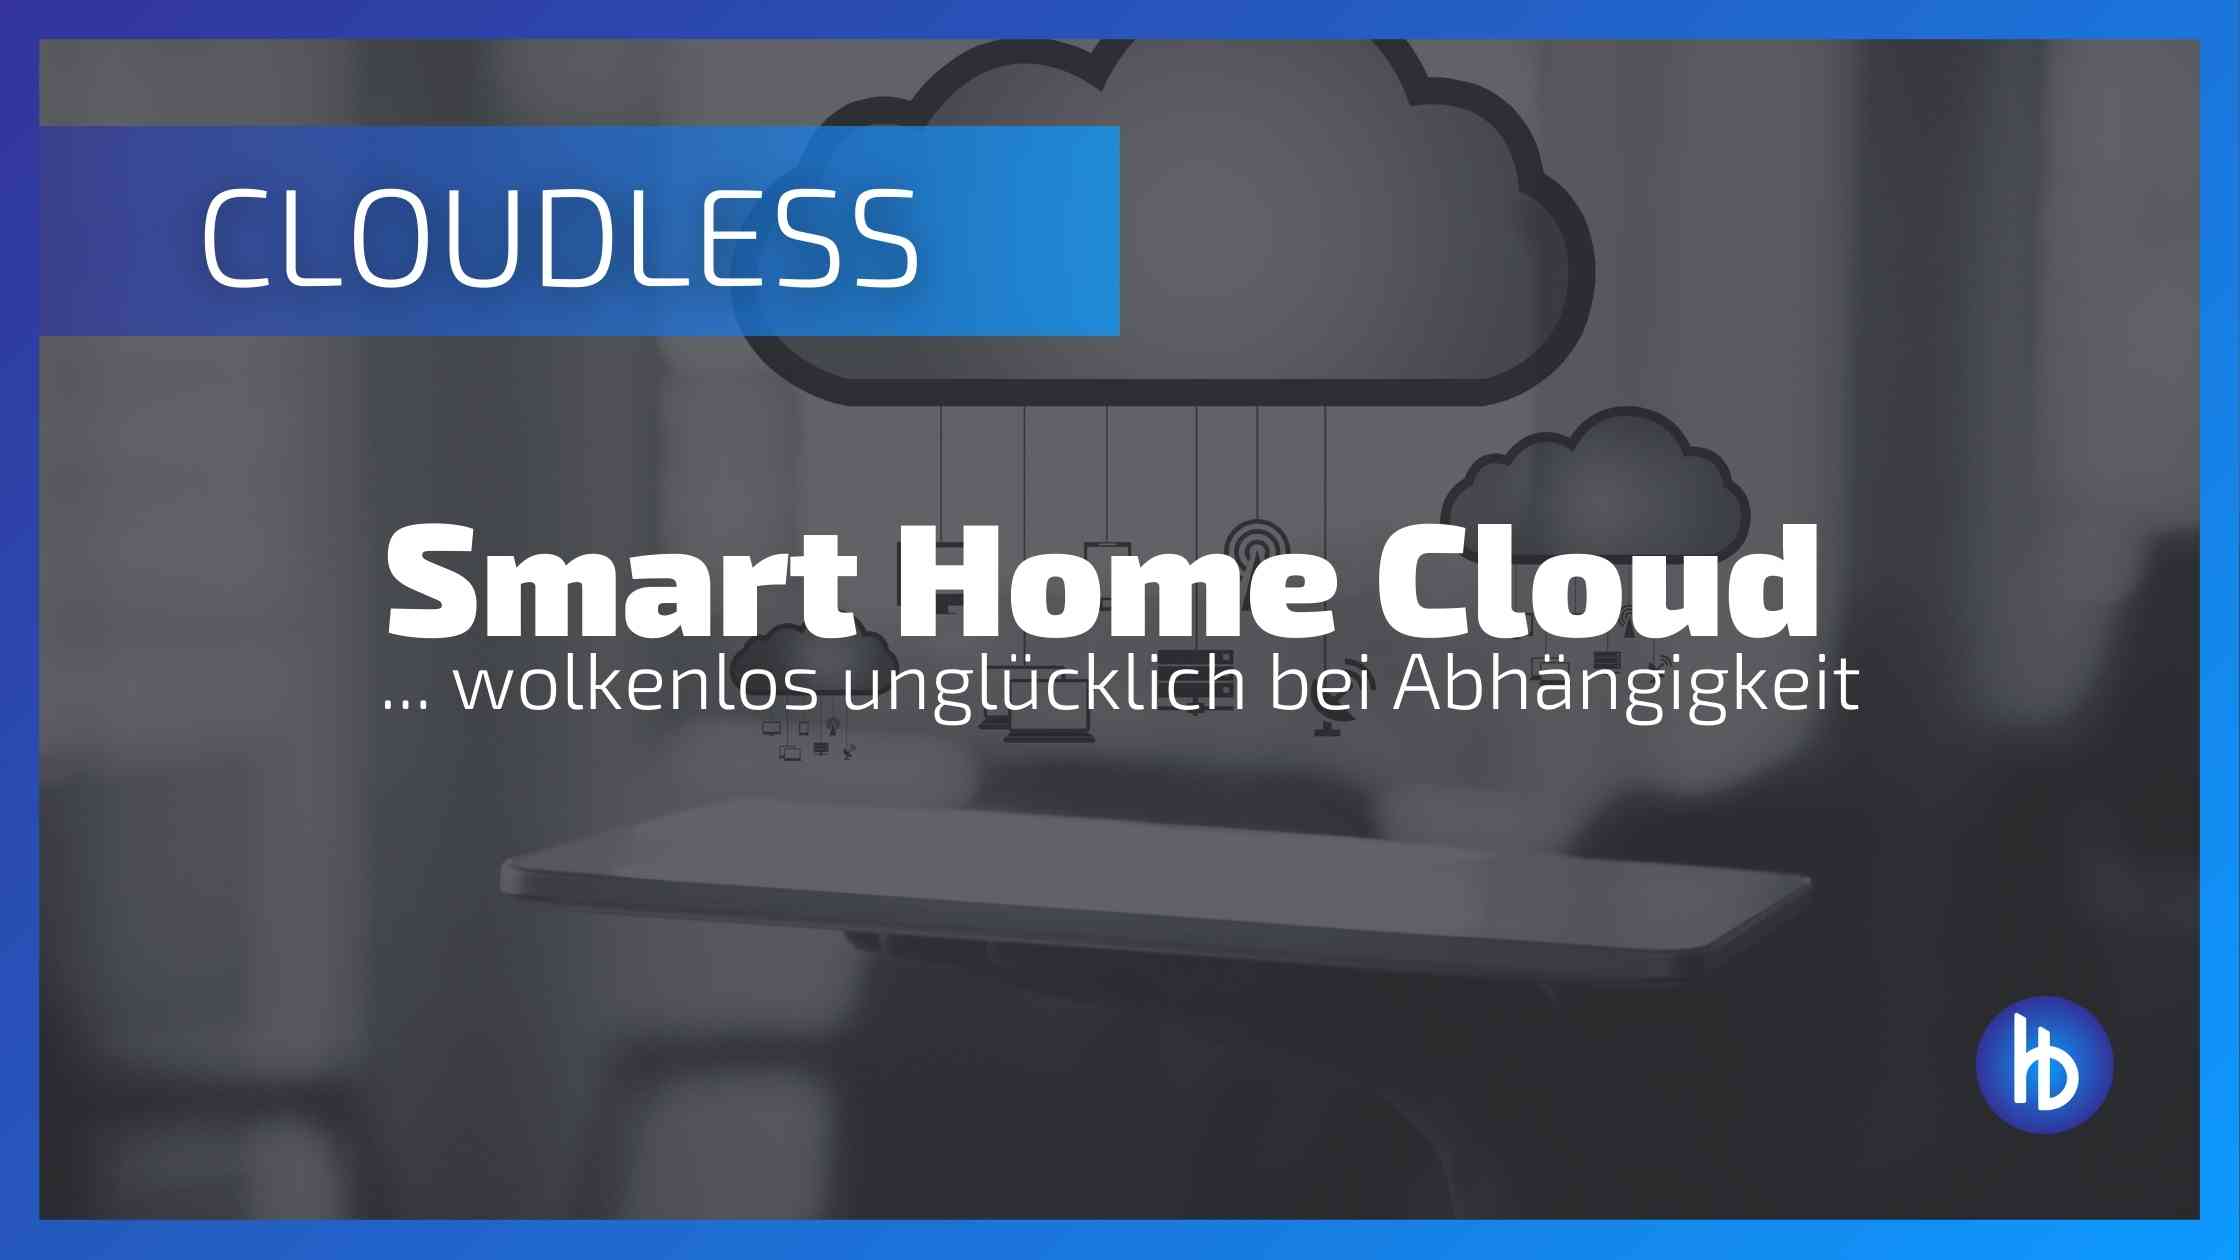 Smart Home Cloud – Fluch und Segen